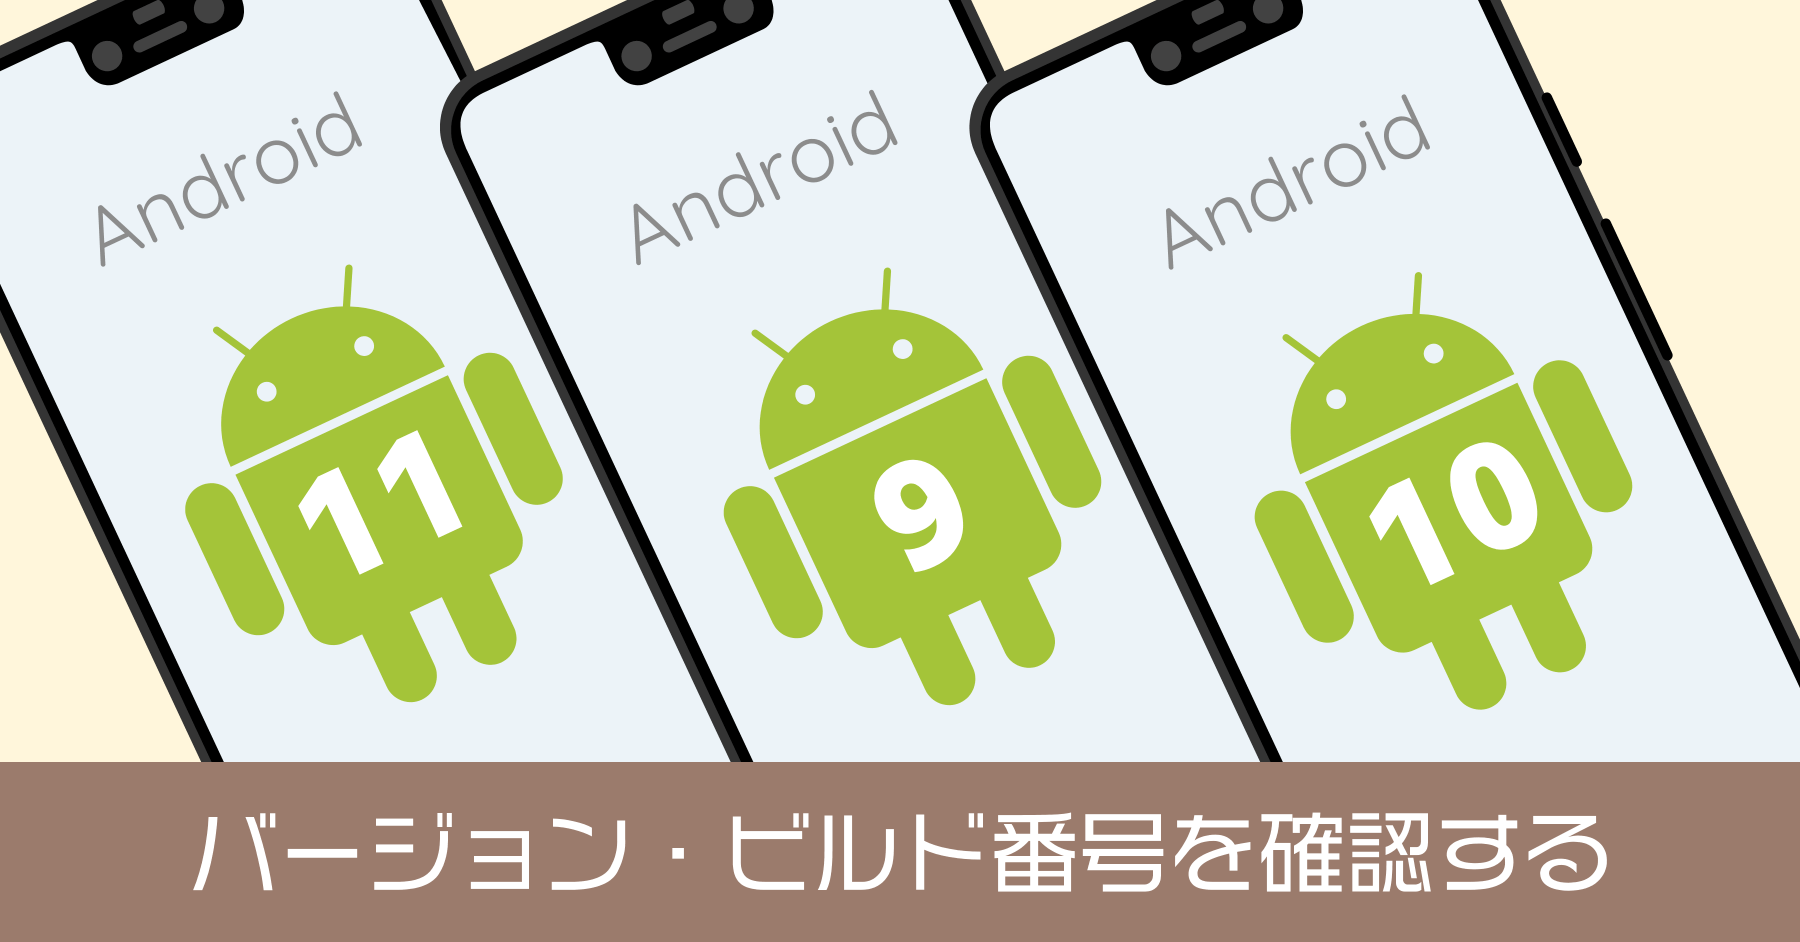 Android のバージョン・ビルド番号を確認する方法